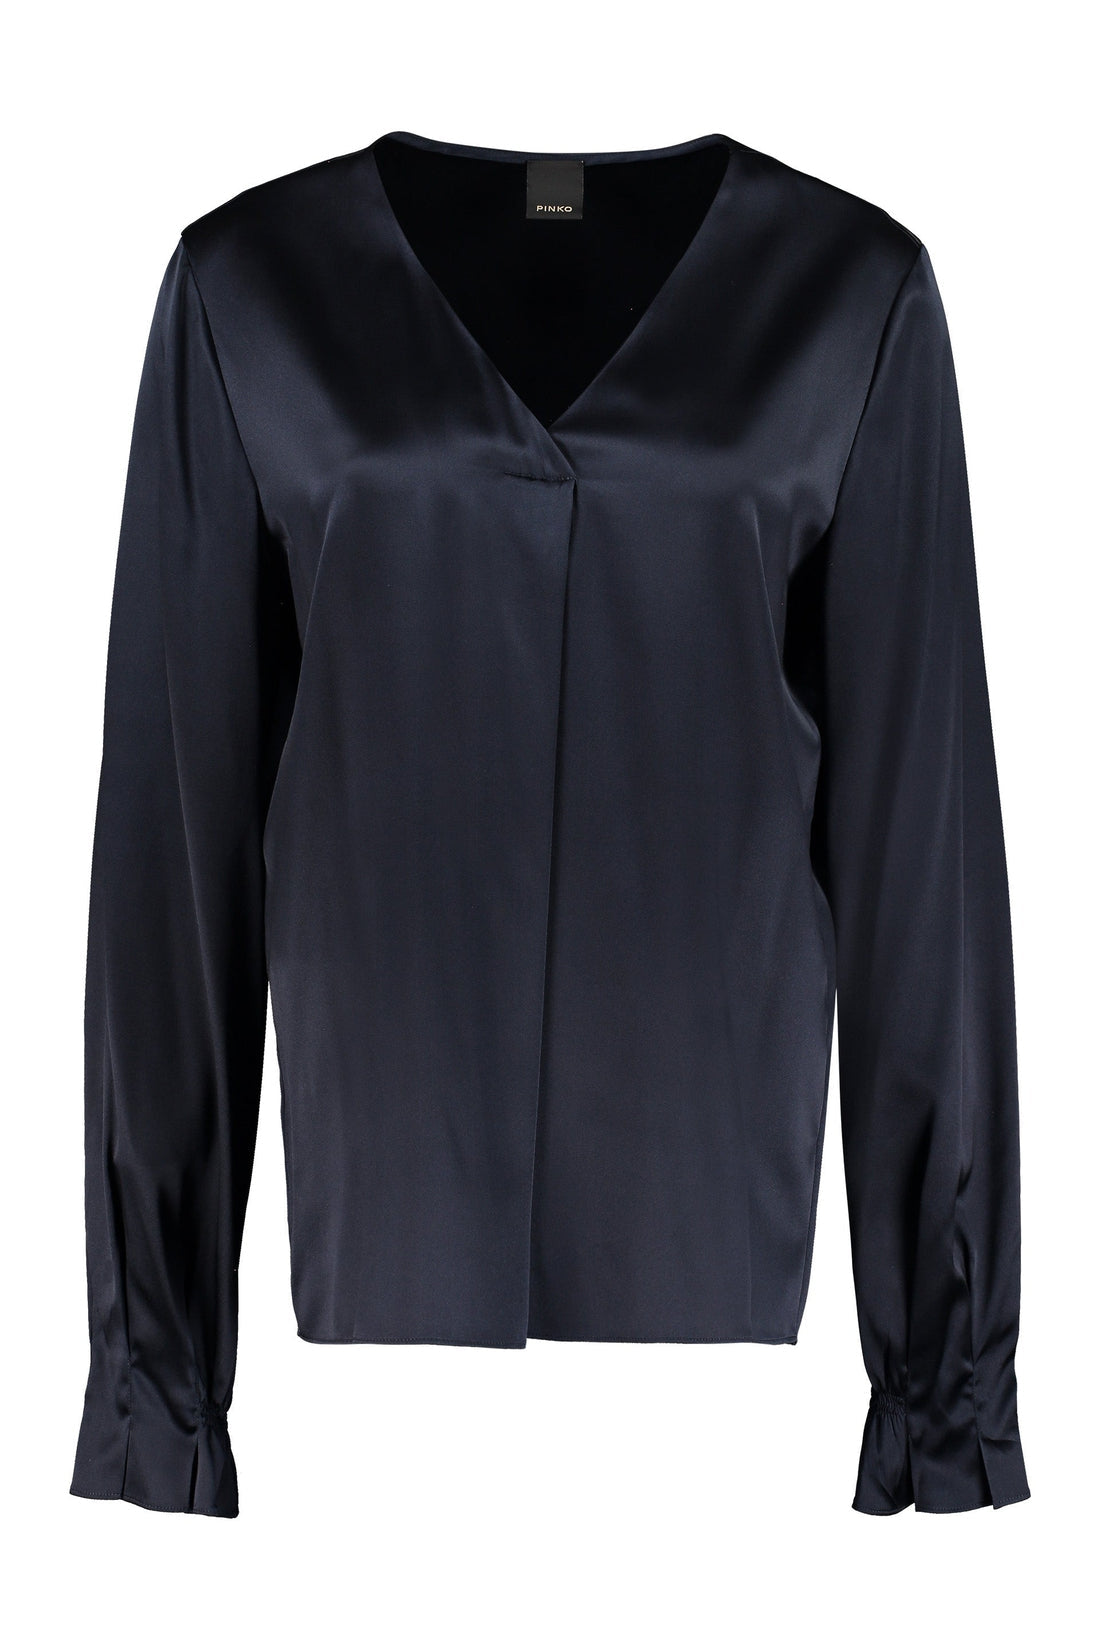 Pinko-OUTLET-SALE-Renzo silk stretch satin blouse-ARCHIVIST